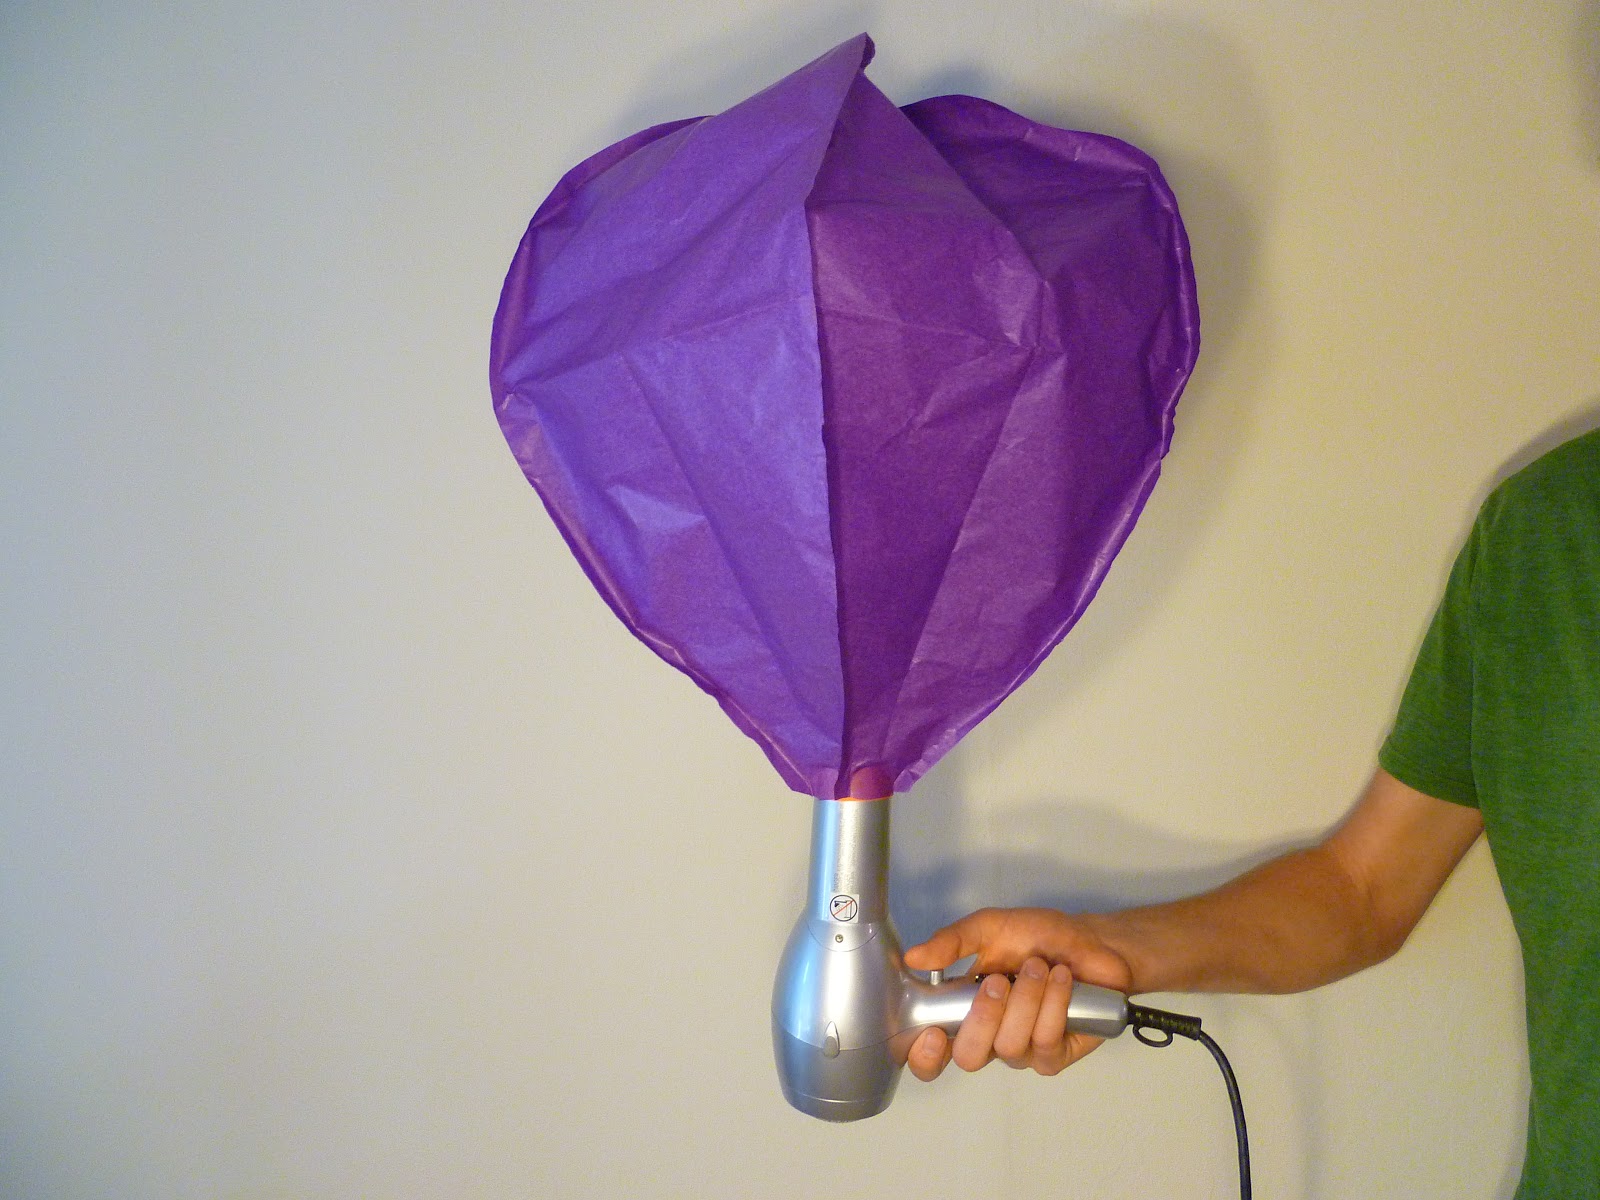 Oakland Discovery Center: Tissue Paper Hot Air Balloon